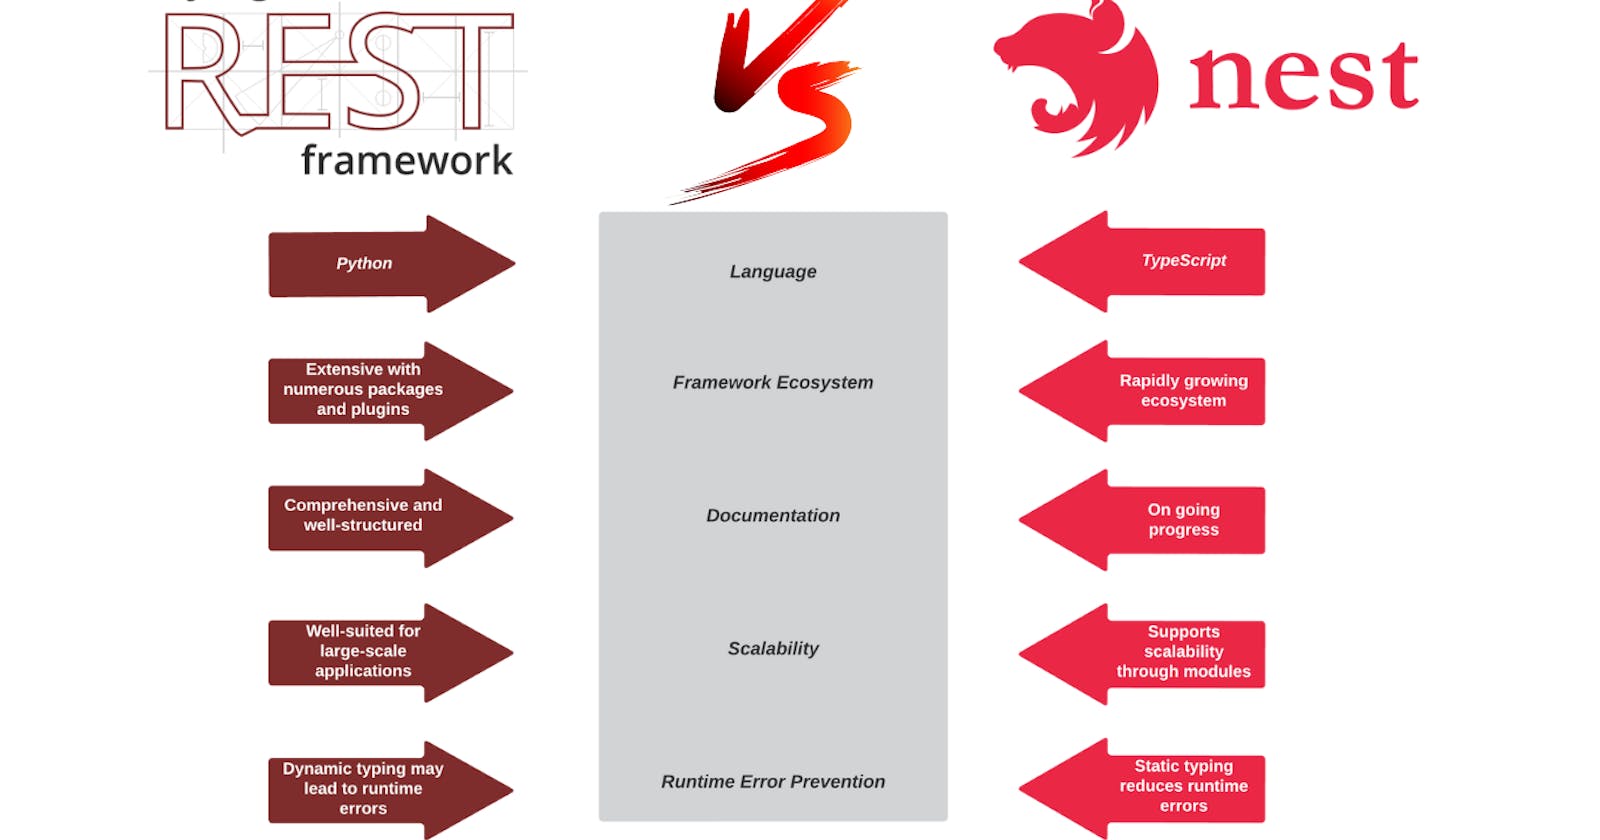 Battle of the Backend API Frameworks: Django REST Framework vs. NestJS - Which One Reigns Supreme?